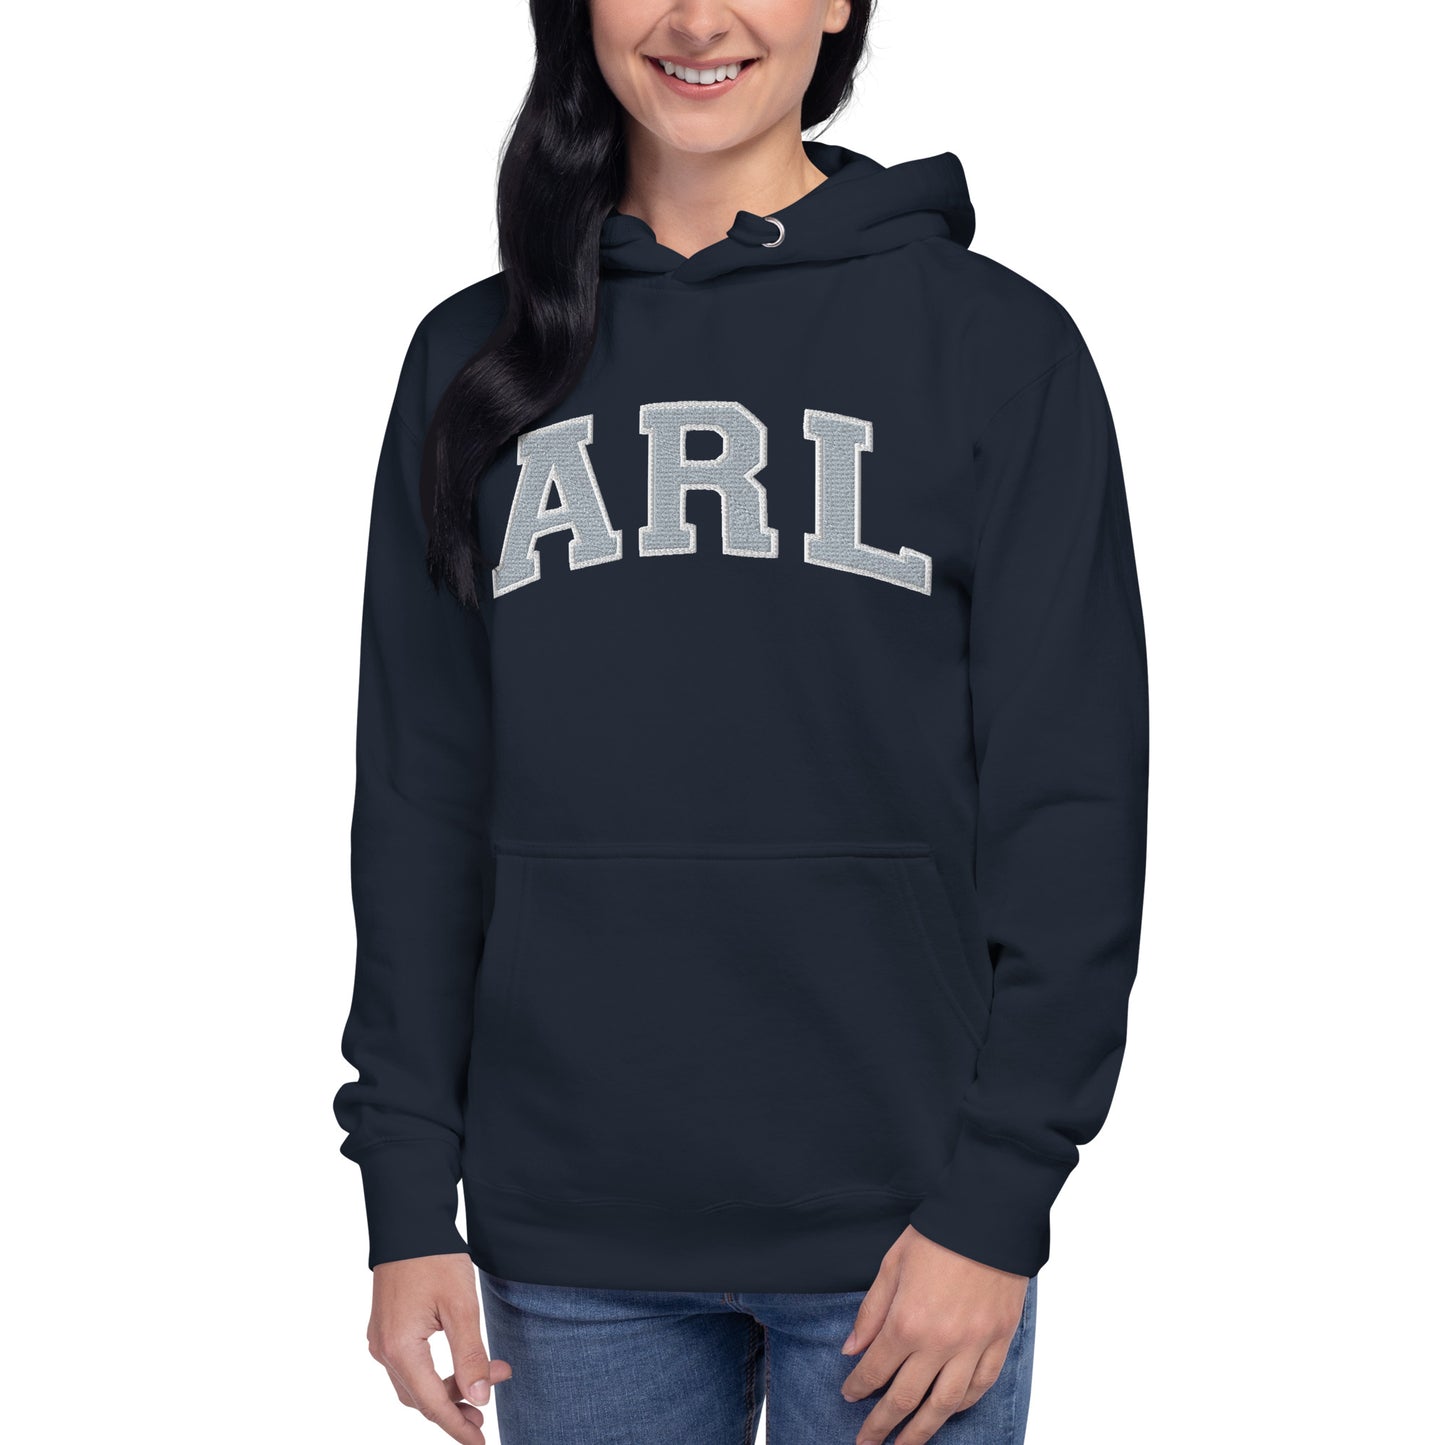 ARL hoodie (embroidered)